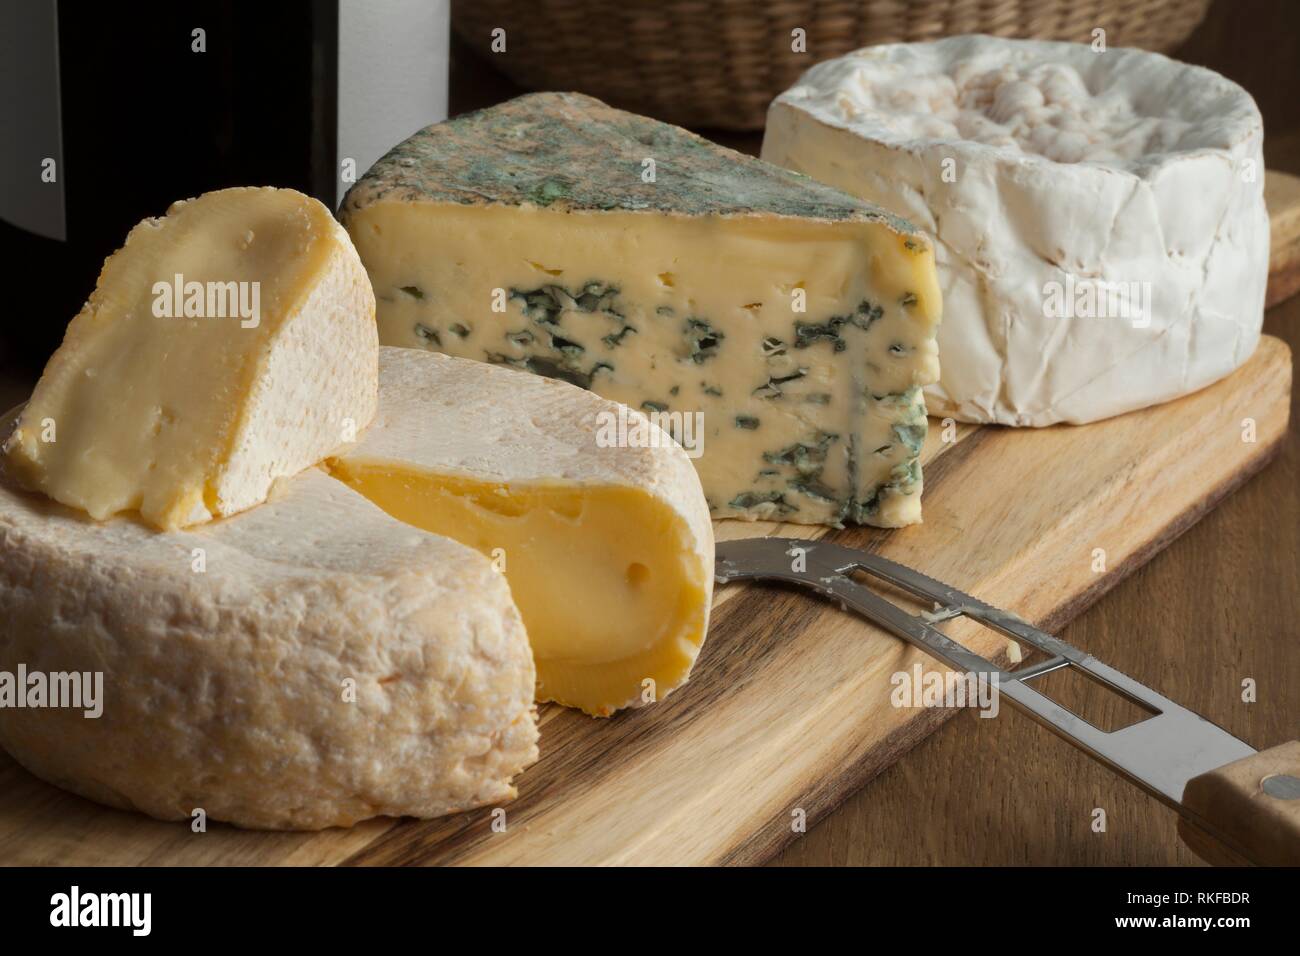 Tabla de quesos franceses con variedad de quesos para el postre. Foto de stock